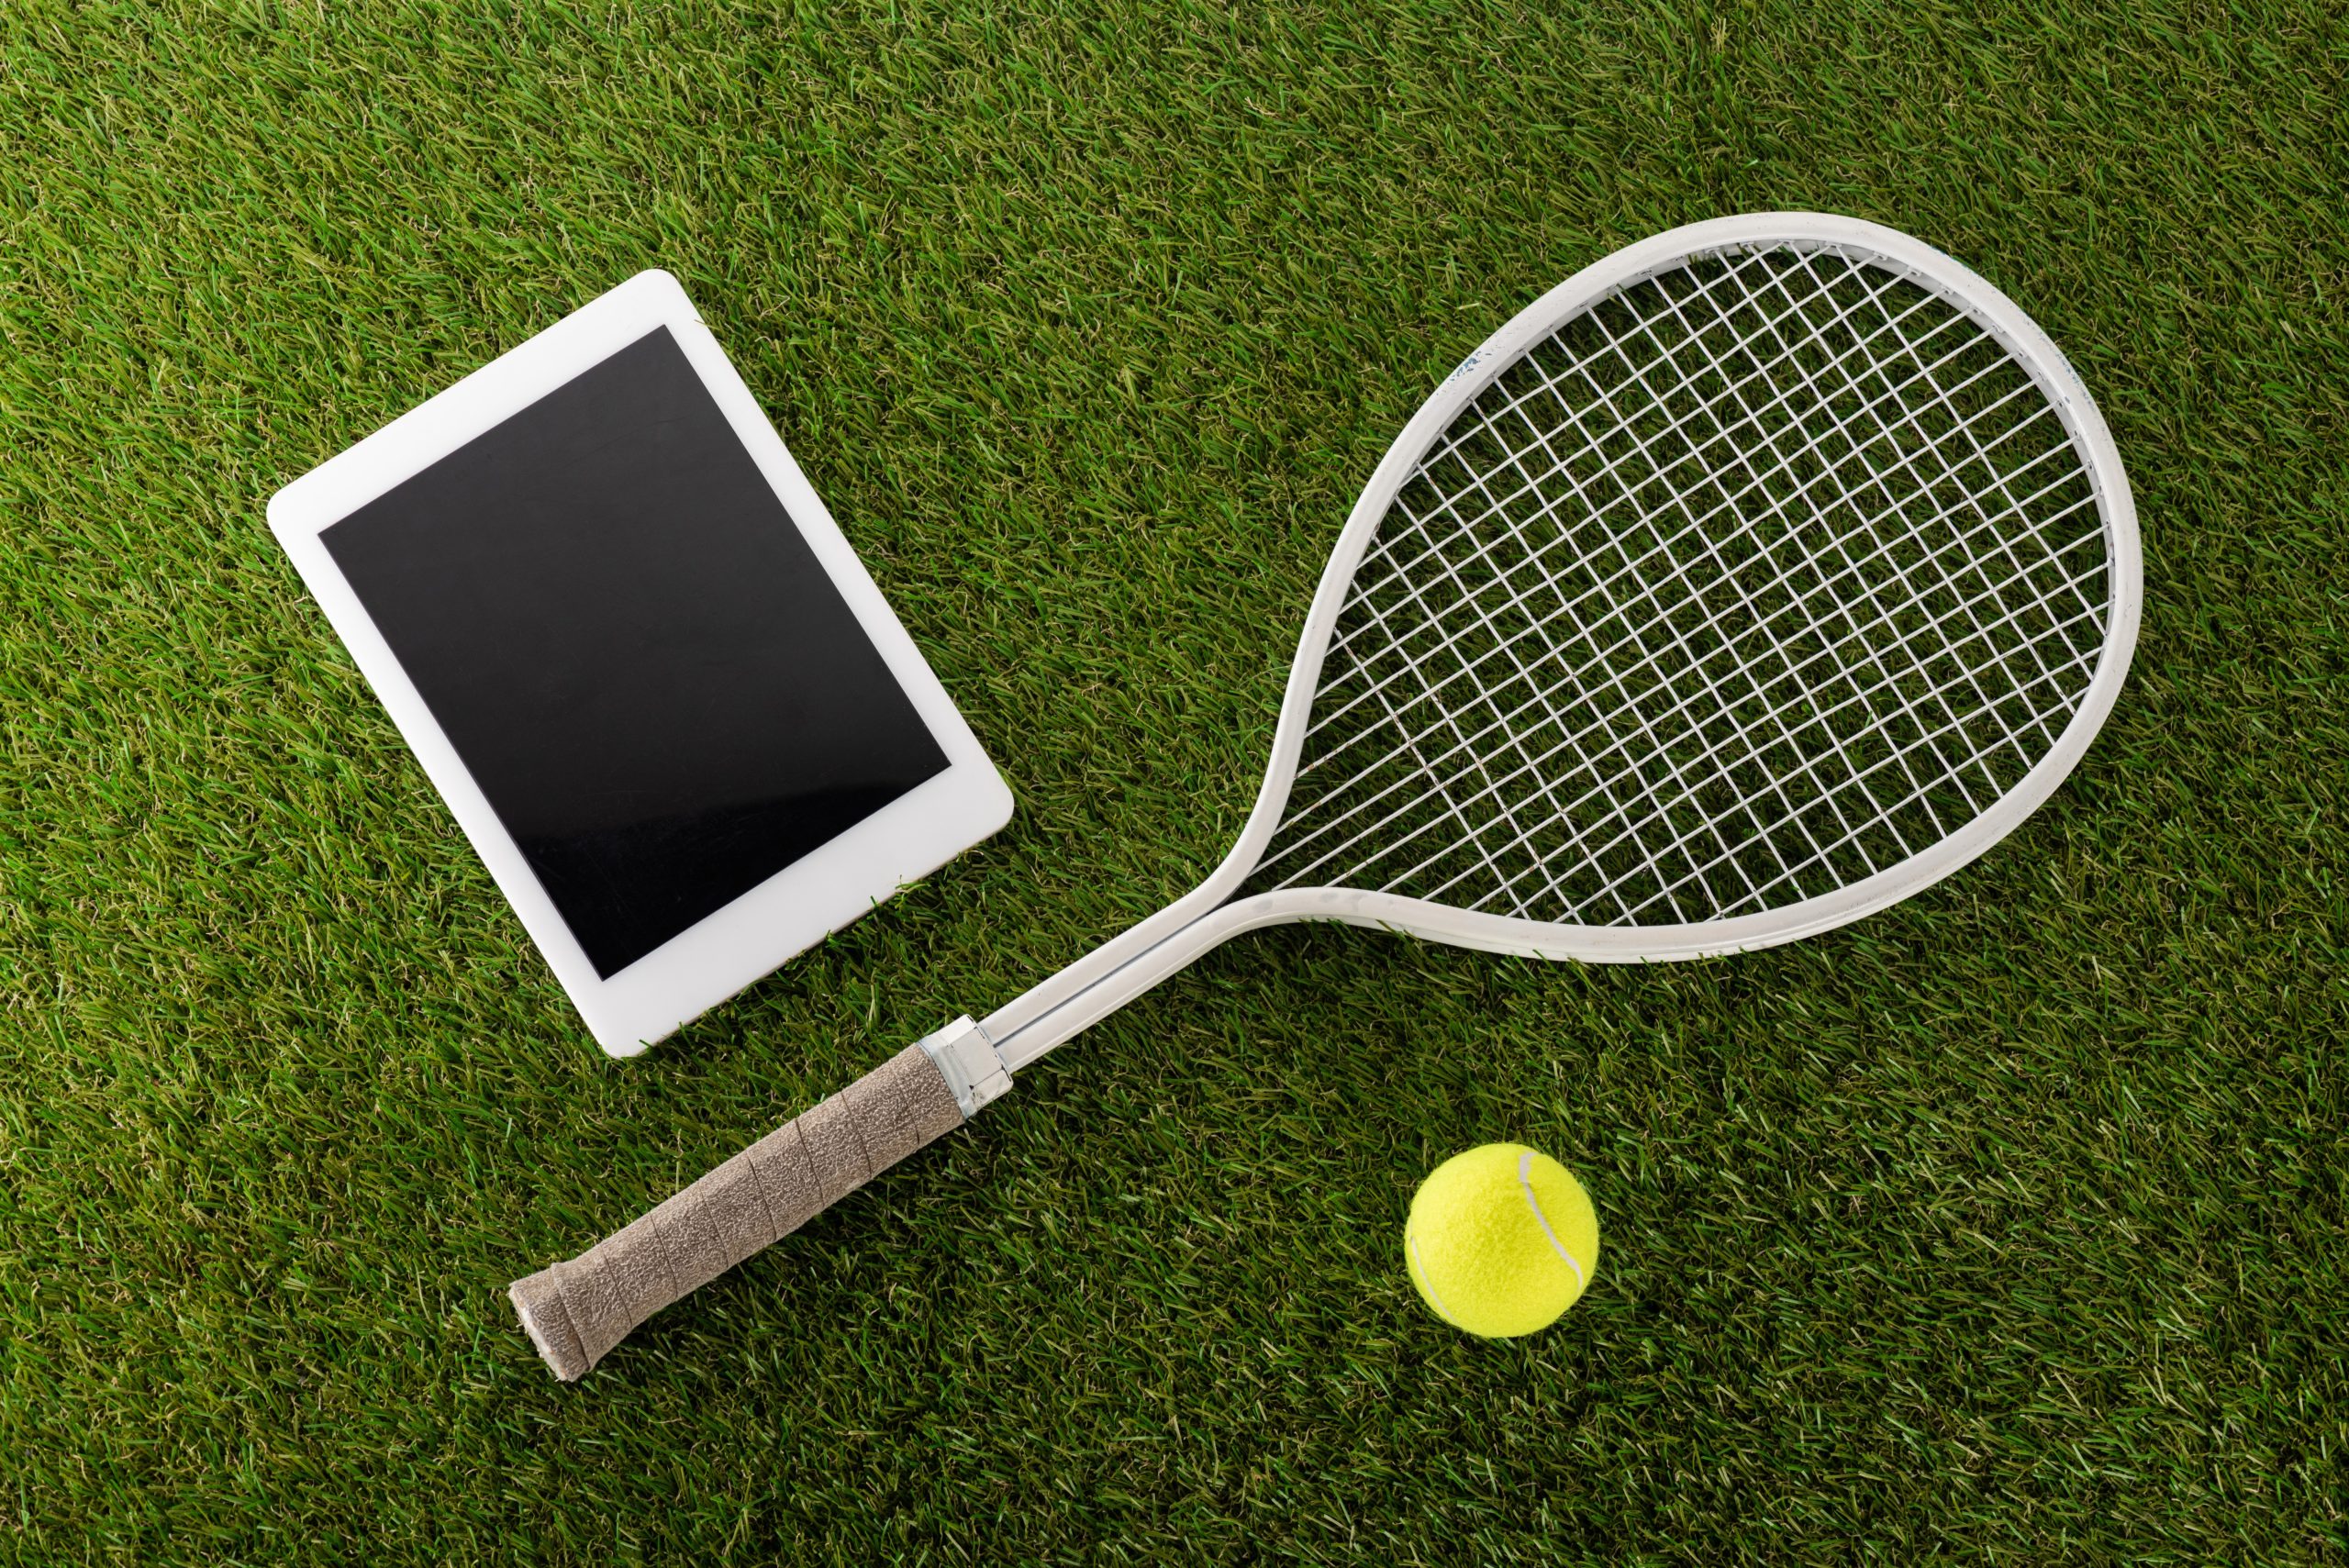 sportwetten-french-open-tenniswetten-tipps-quoten-favoriten